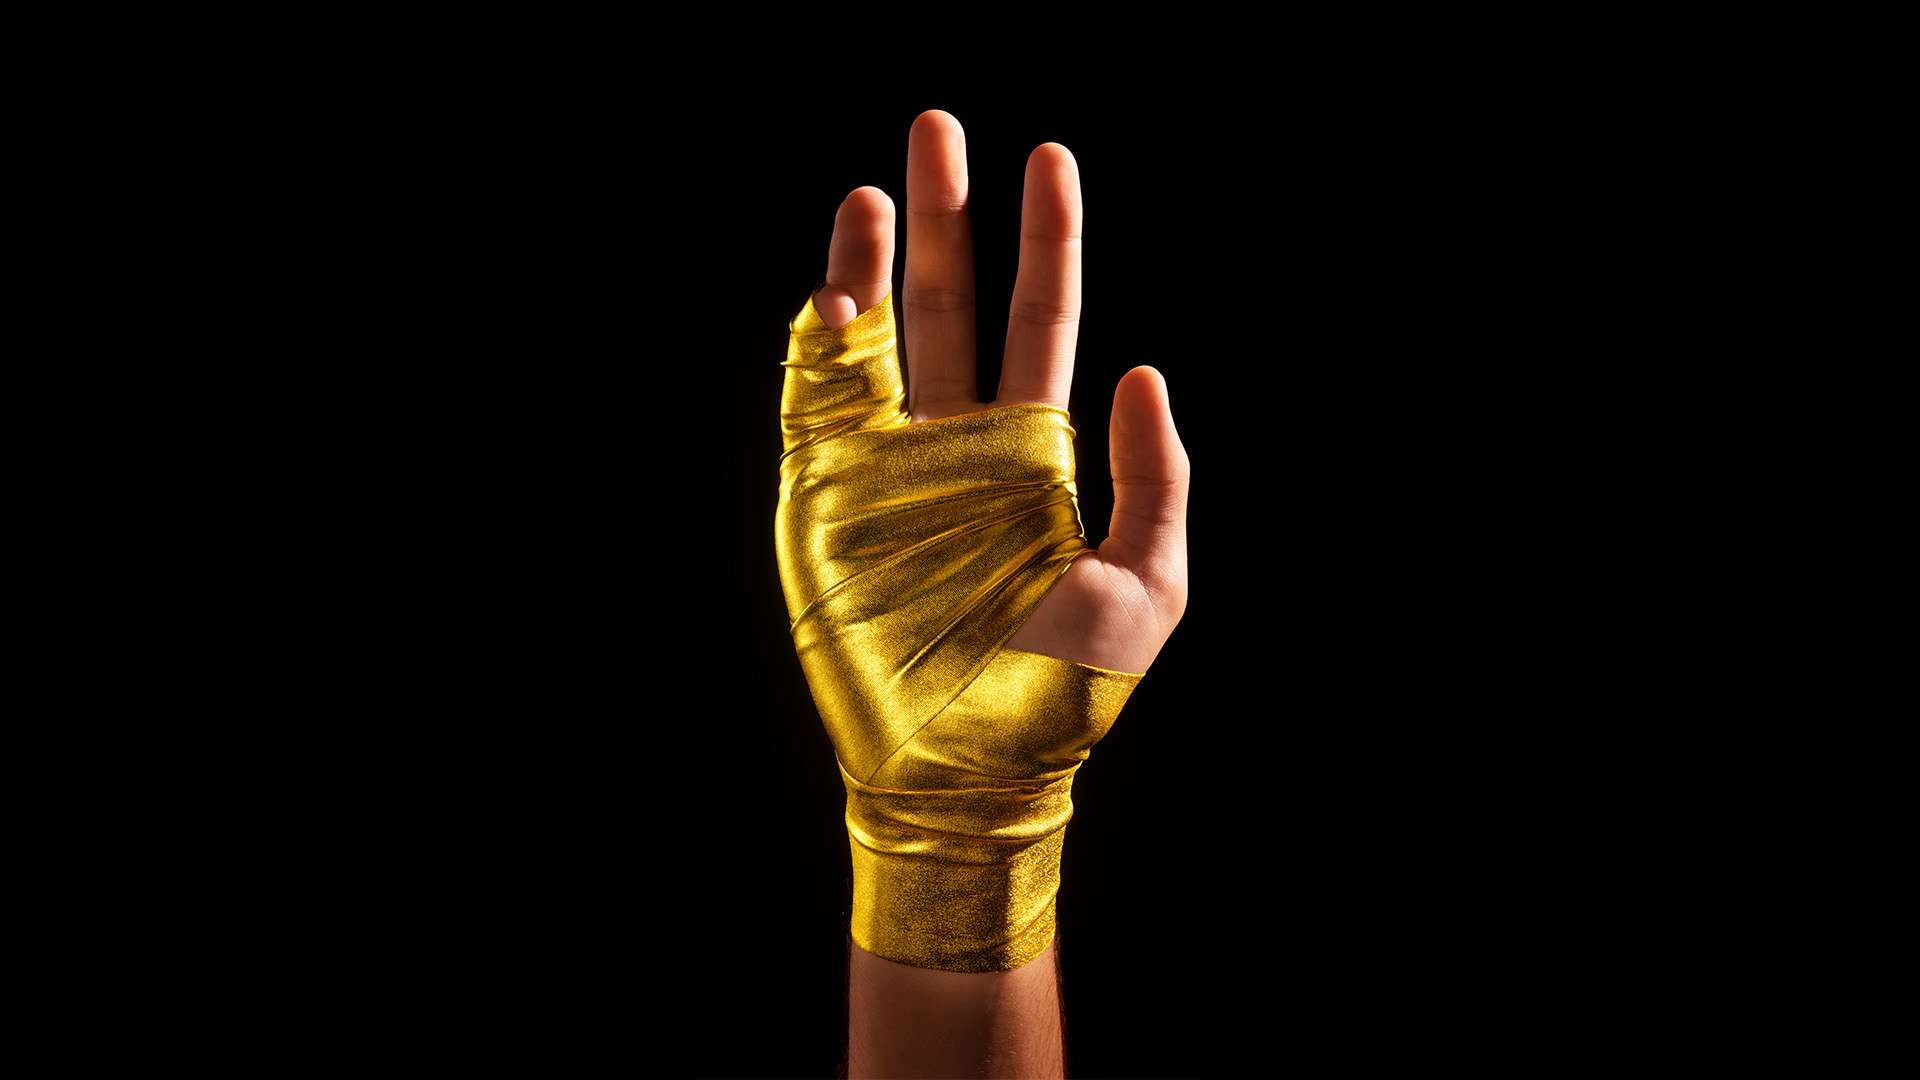 adidas x Benzema Hand of Gold film